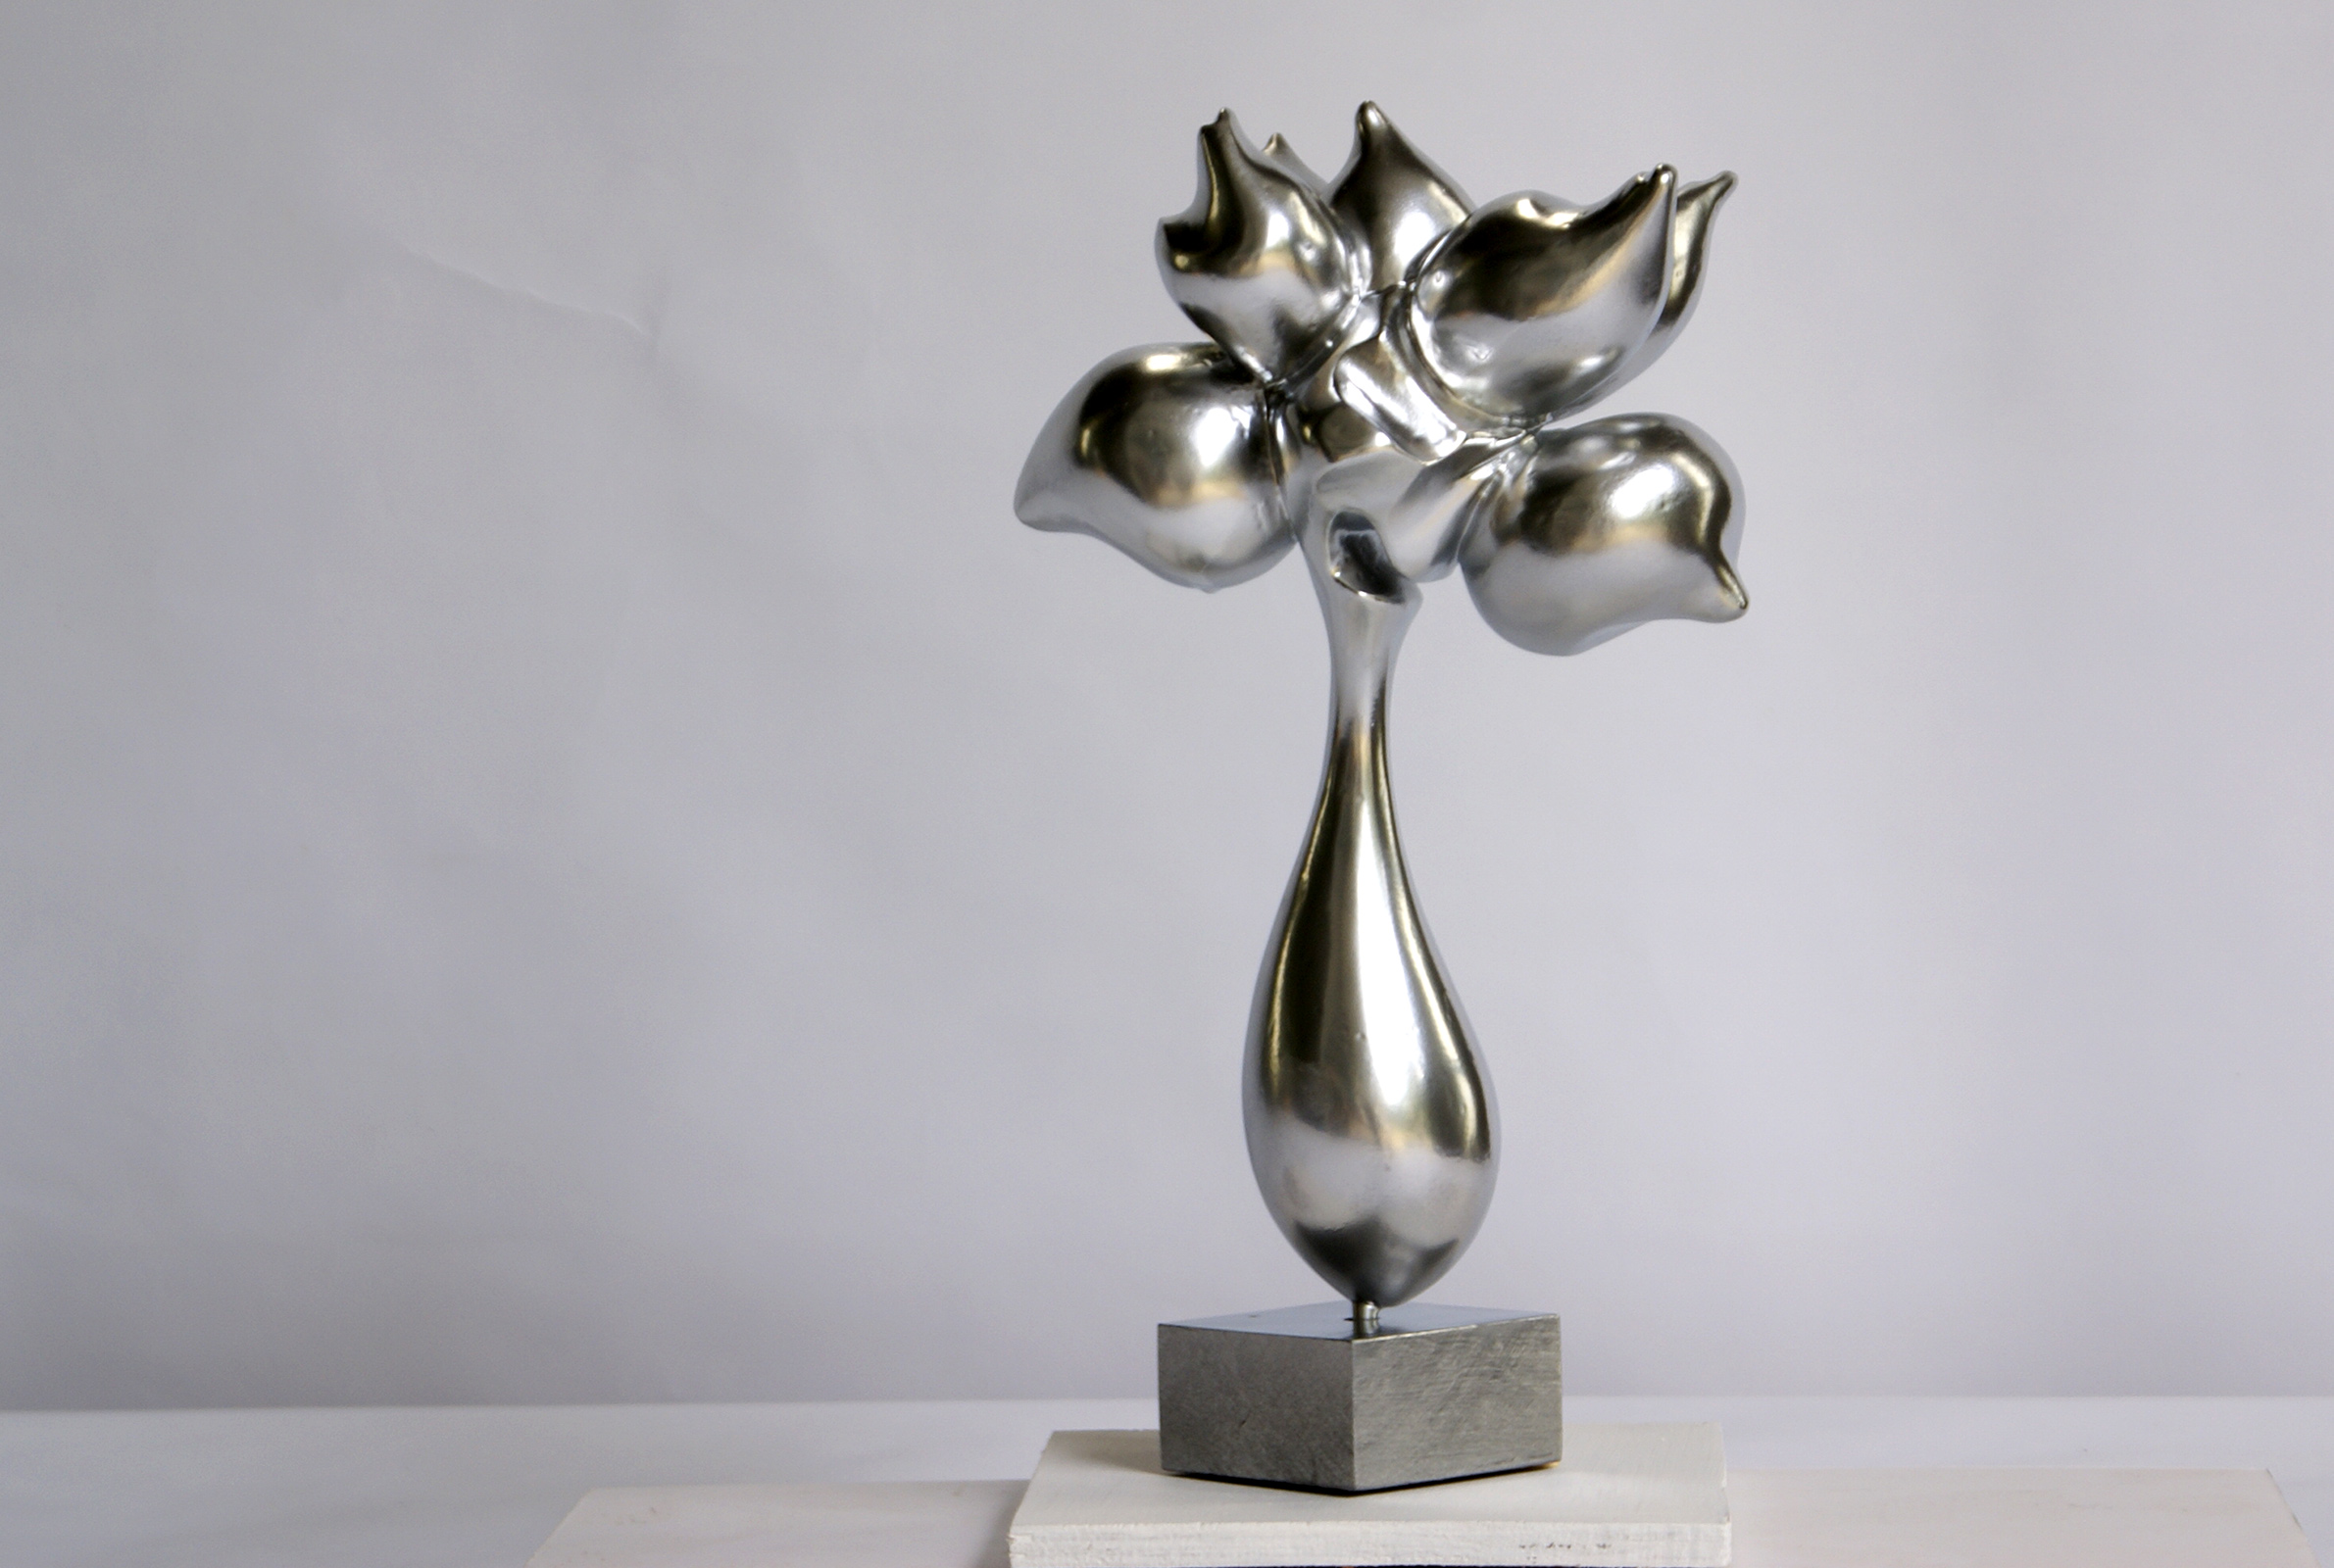 Bouquet, 2011, sculpture by Adrian Mauriks.